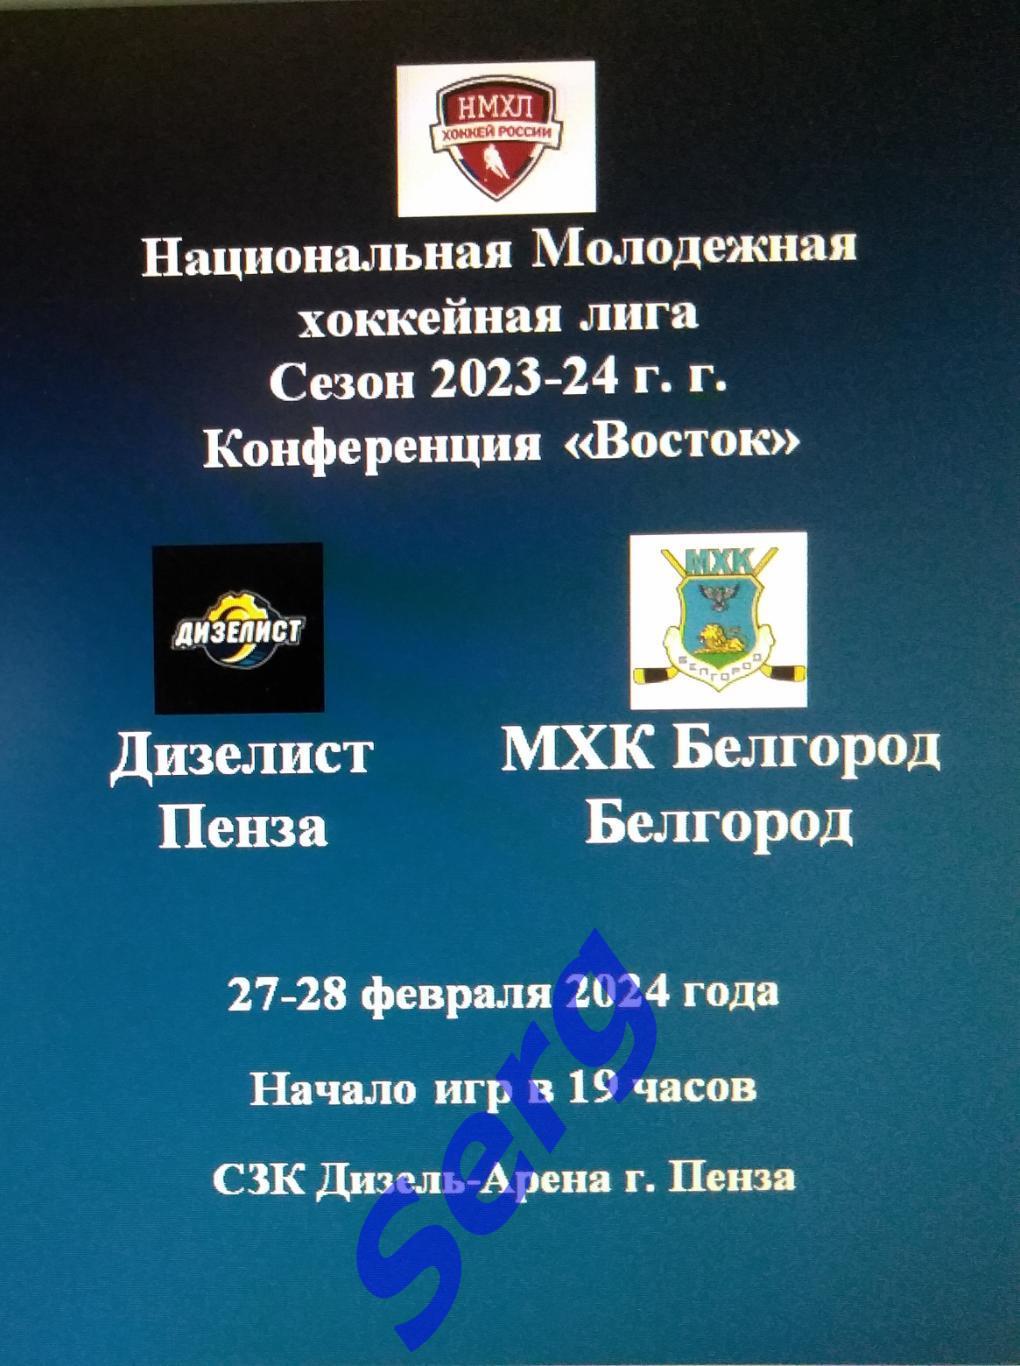 МХК Дизелист Пенза - МХК Белгород Белгород - 27-28 февраля 2024 год. НМХЛ